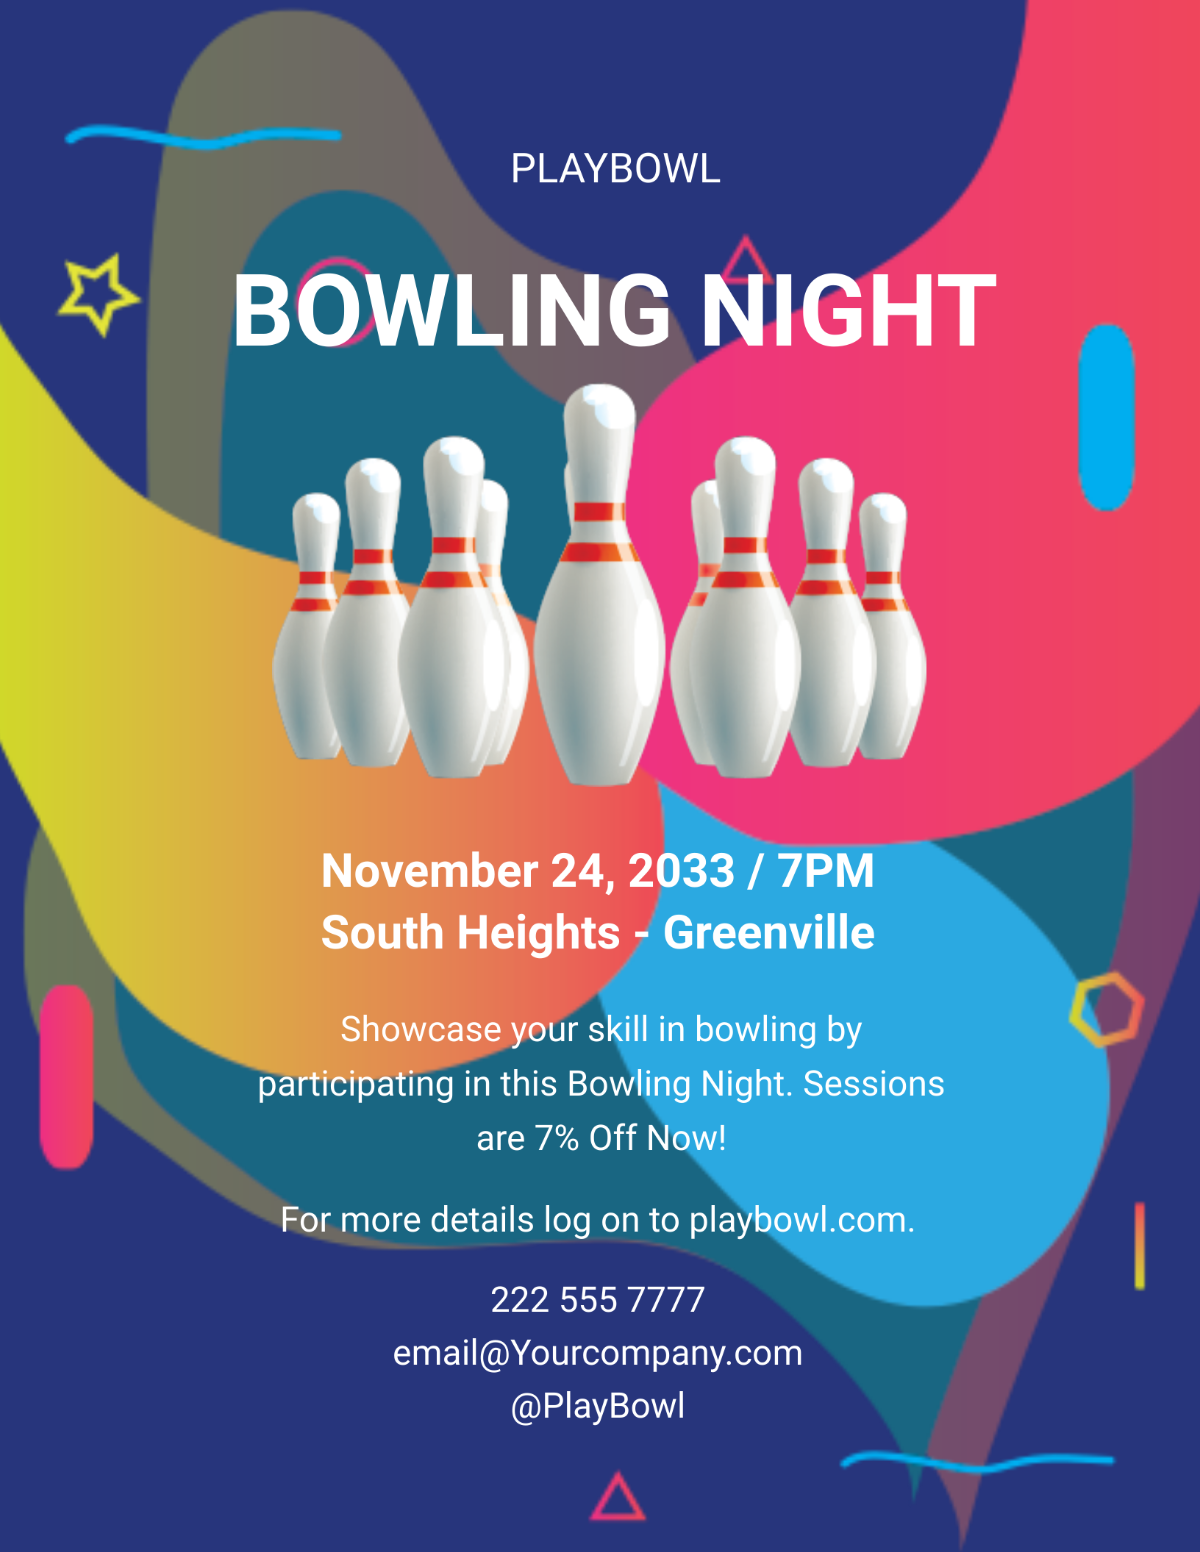 Bowling Night Flyer